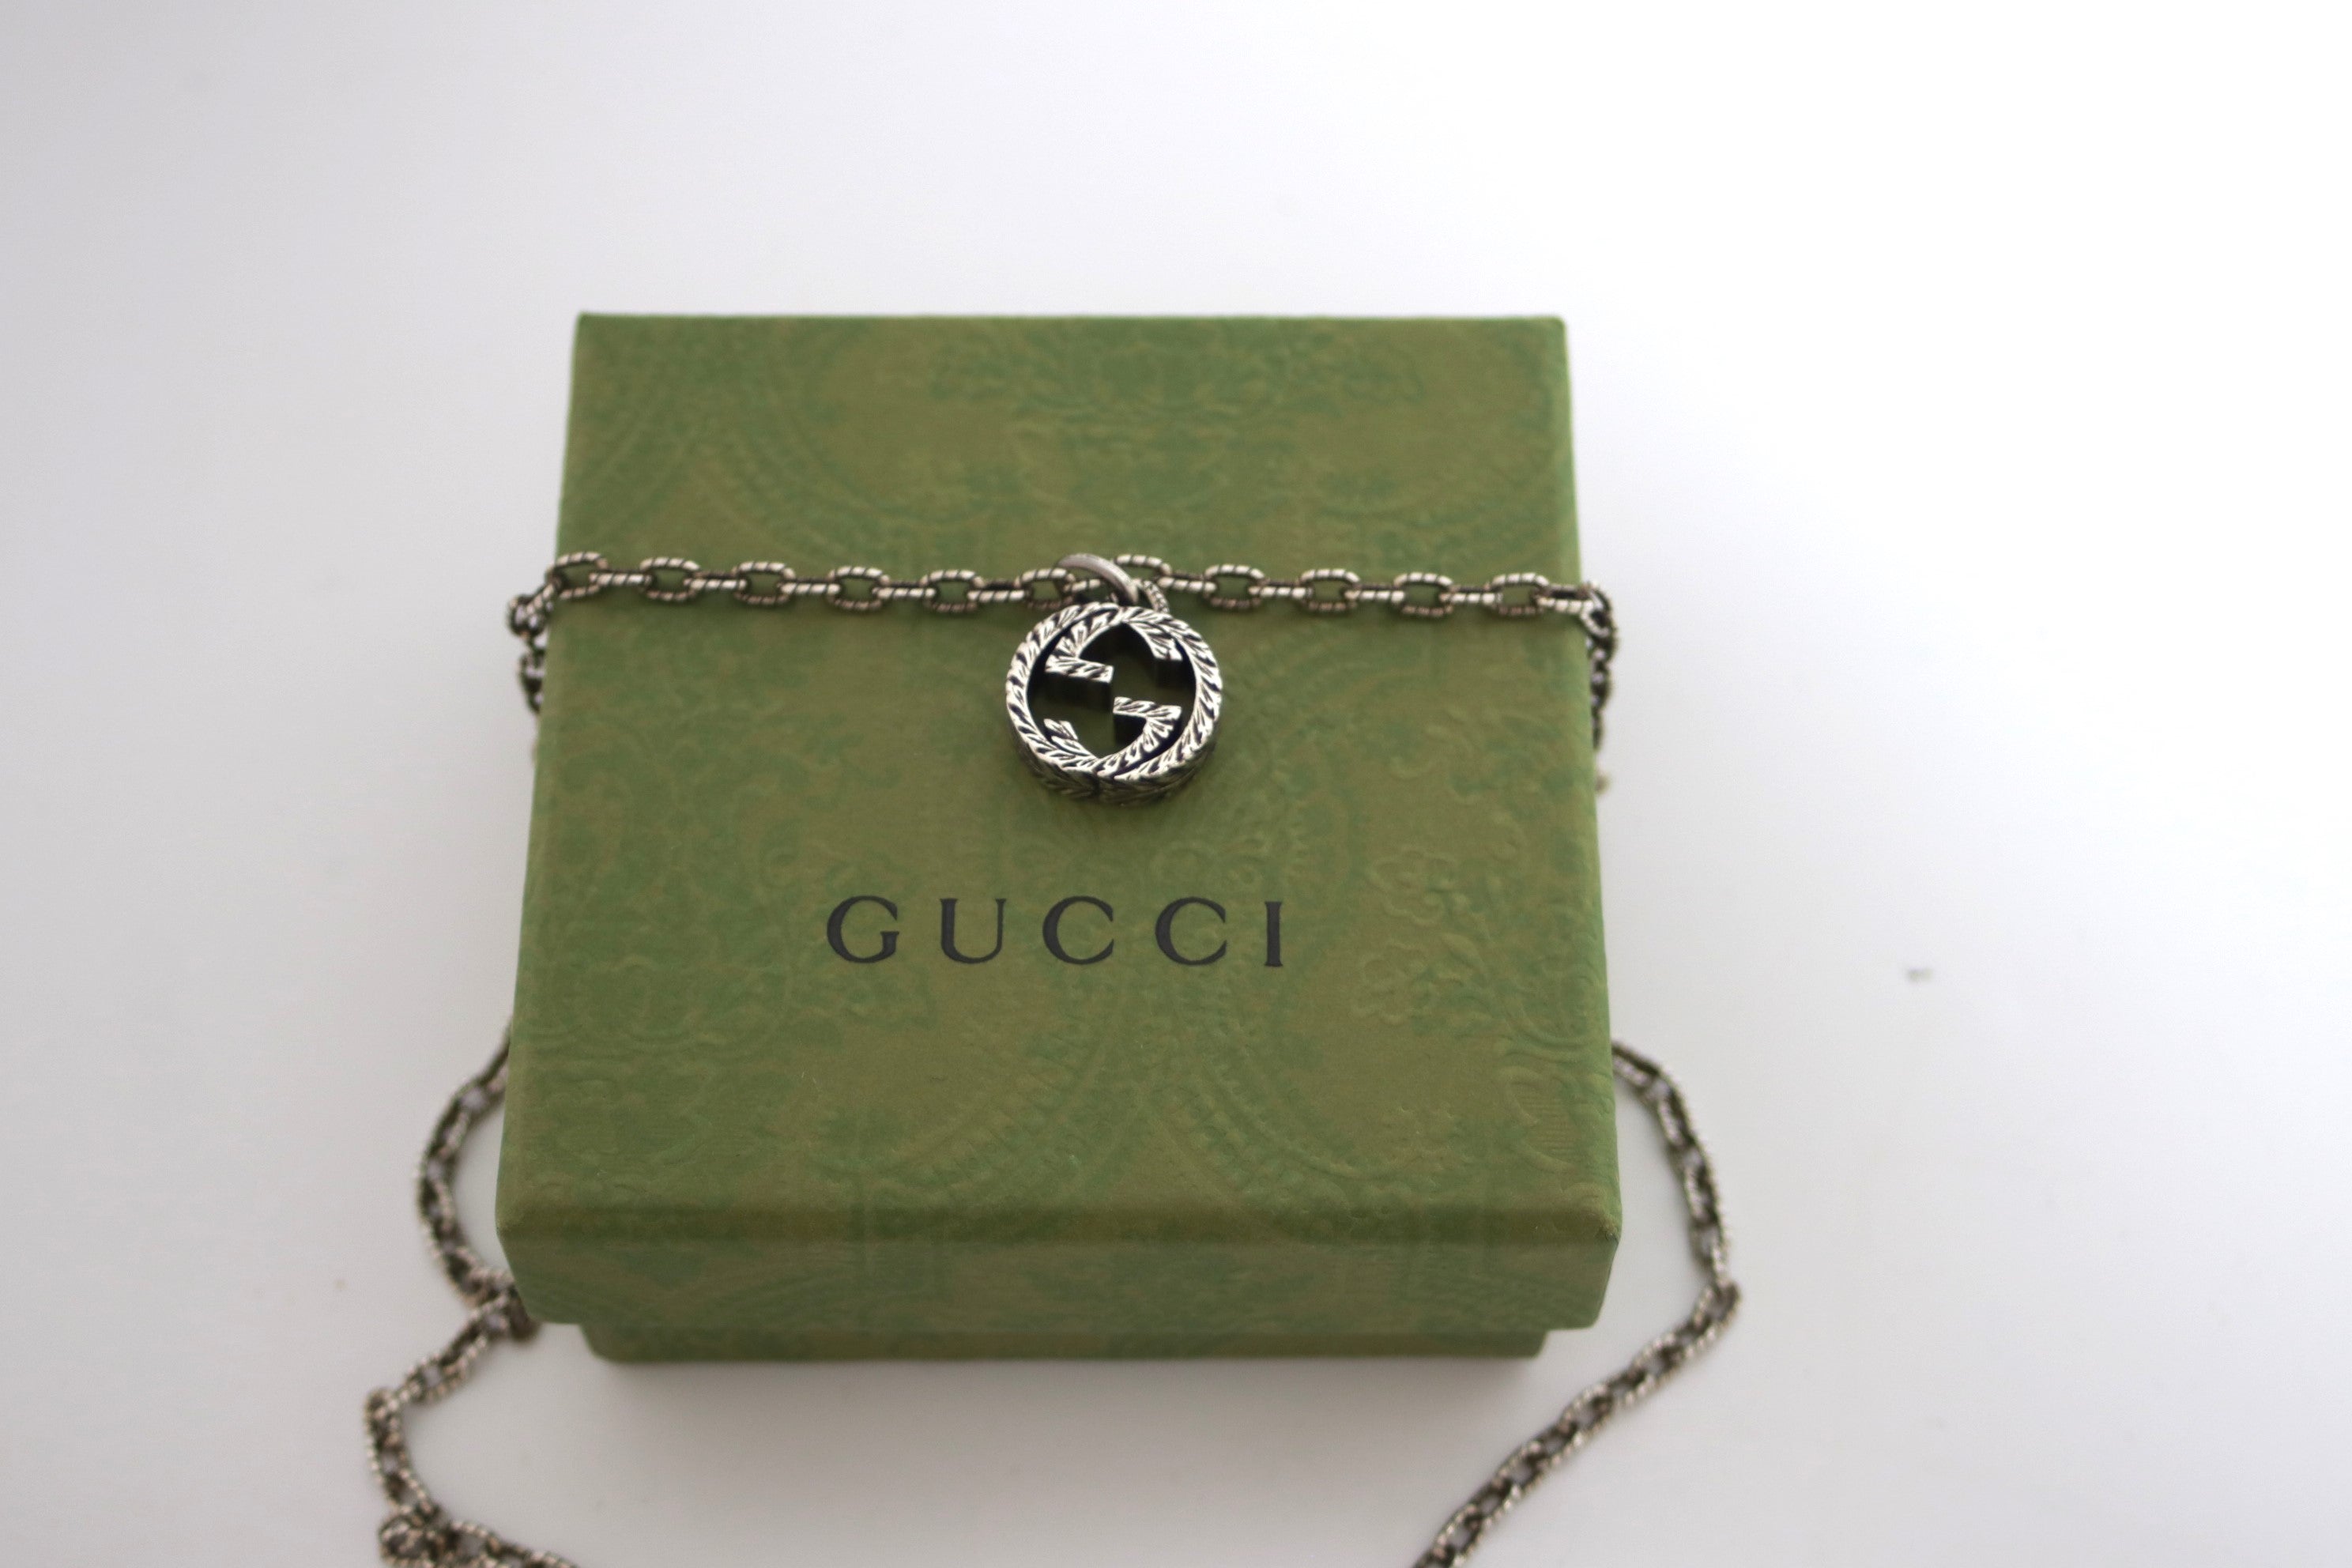 Gucci Interlocking Silver Necklace 45 cm Used (7823)